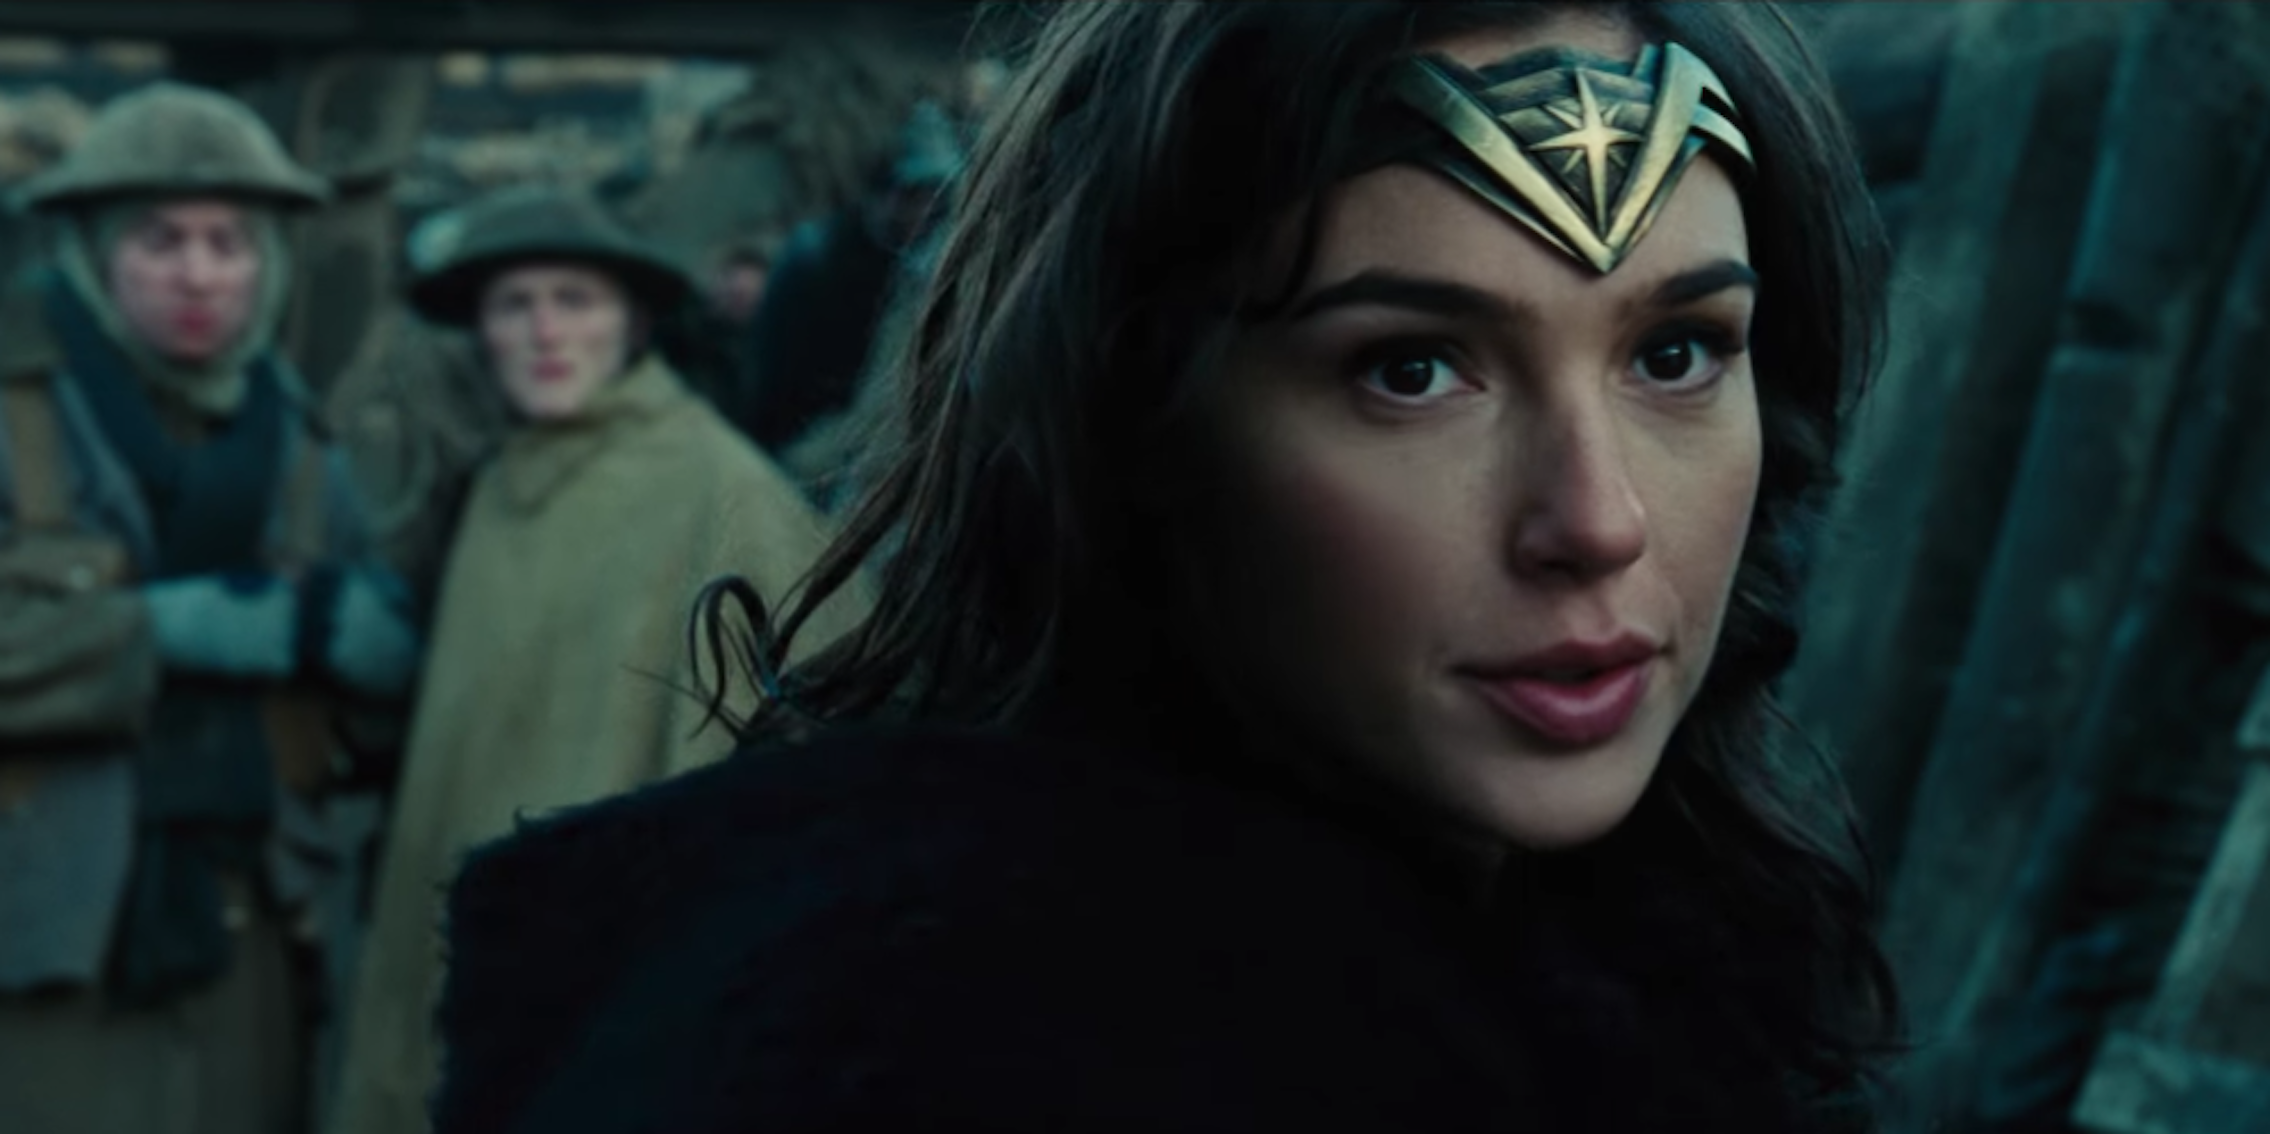 Wonder Woman (2017 Movie): Release Date, Cast & Trailers